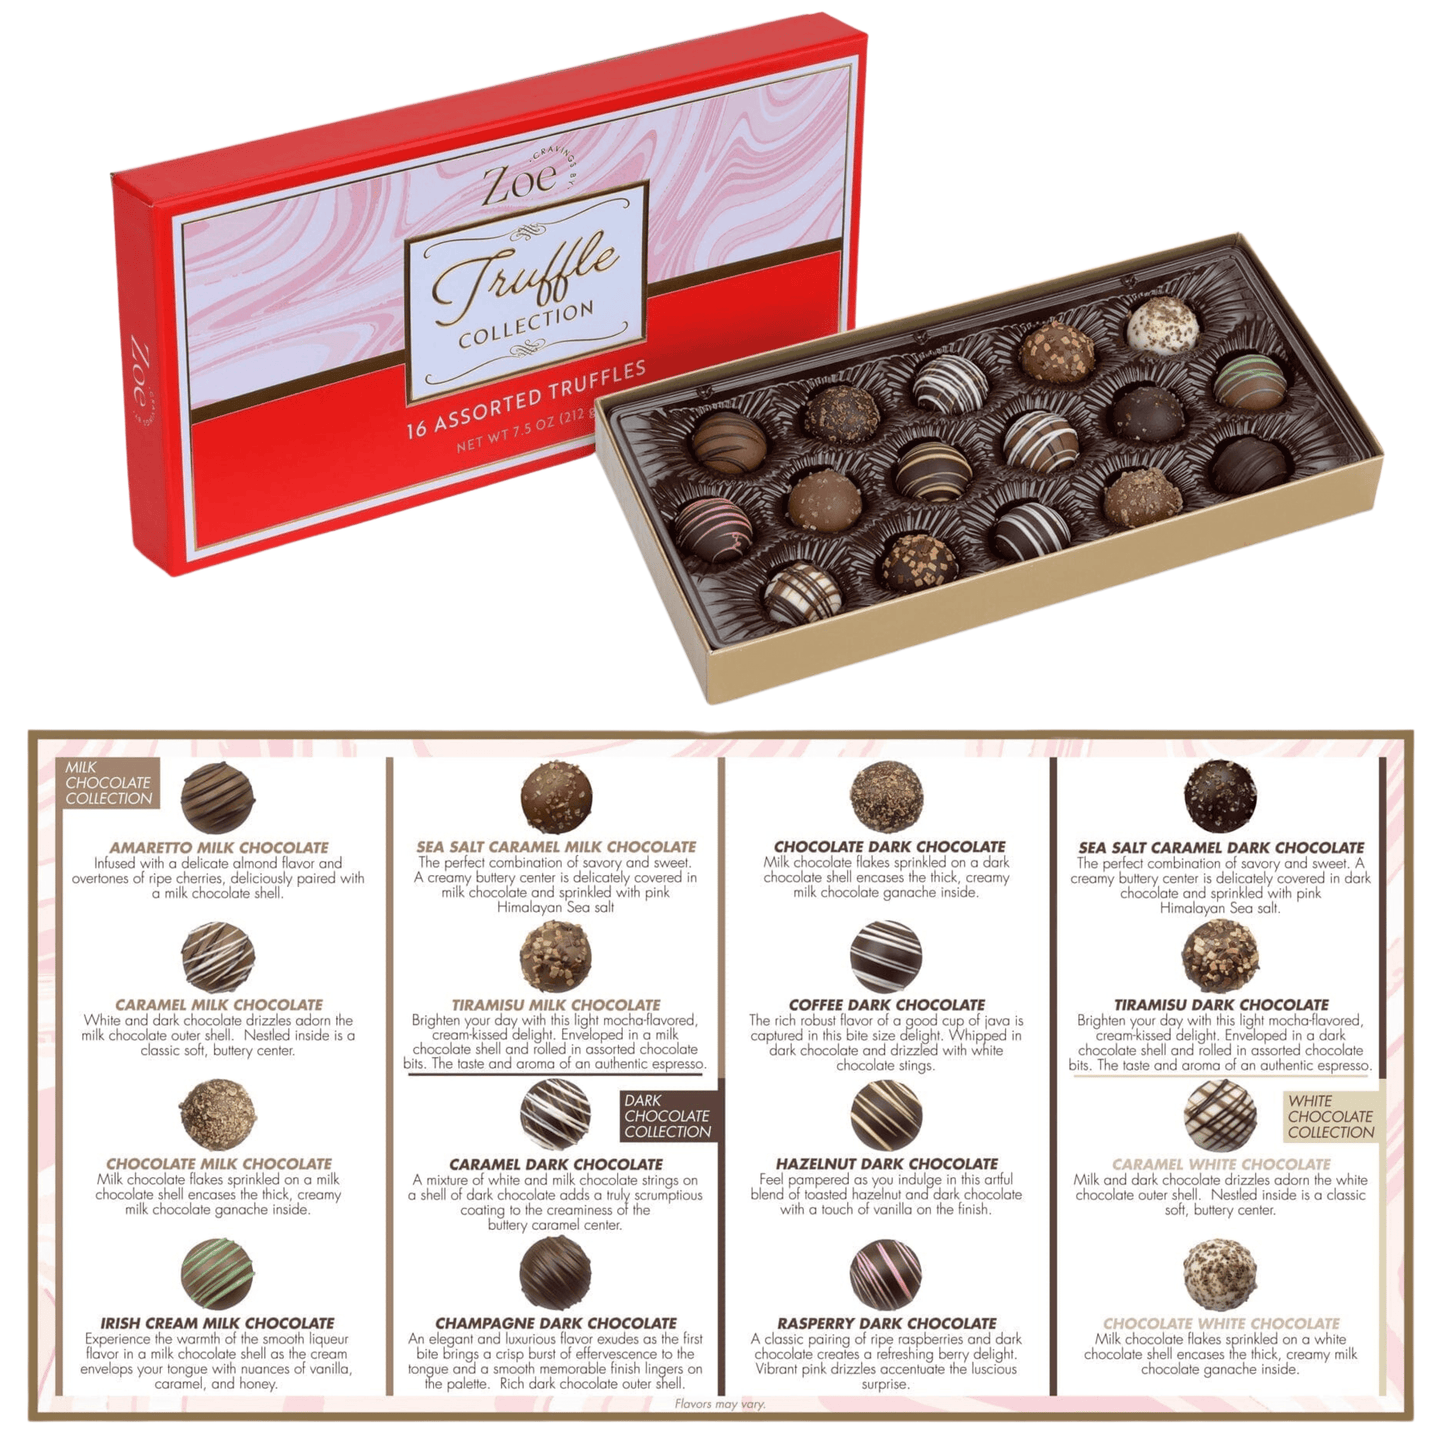 Chocolate Truffles Red Gift Box - Cravings by Zoe - Gourmet Chocolate